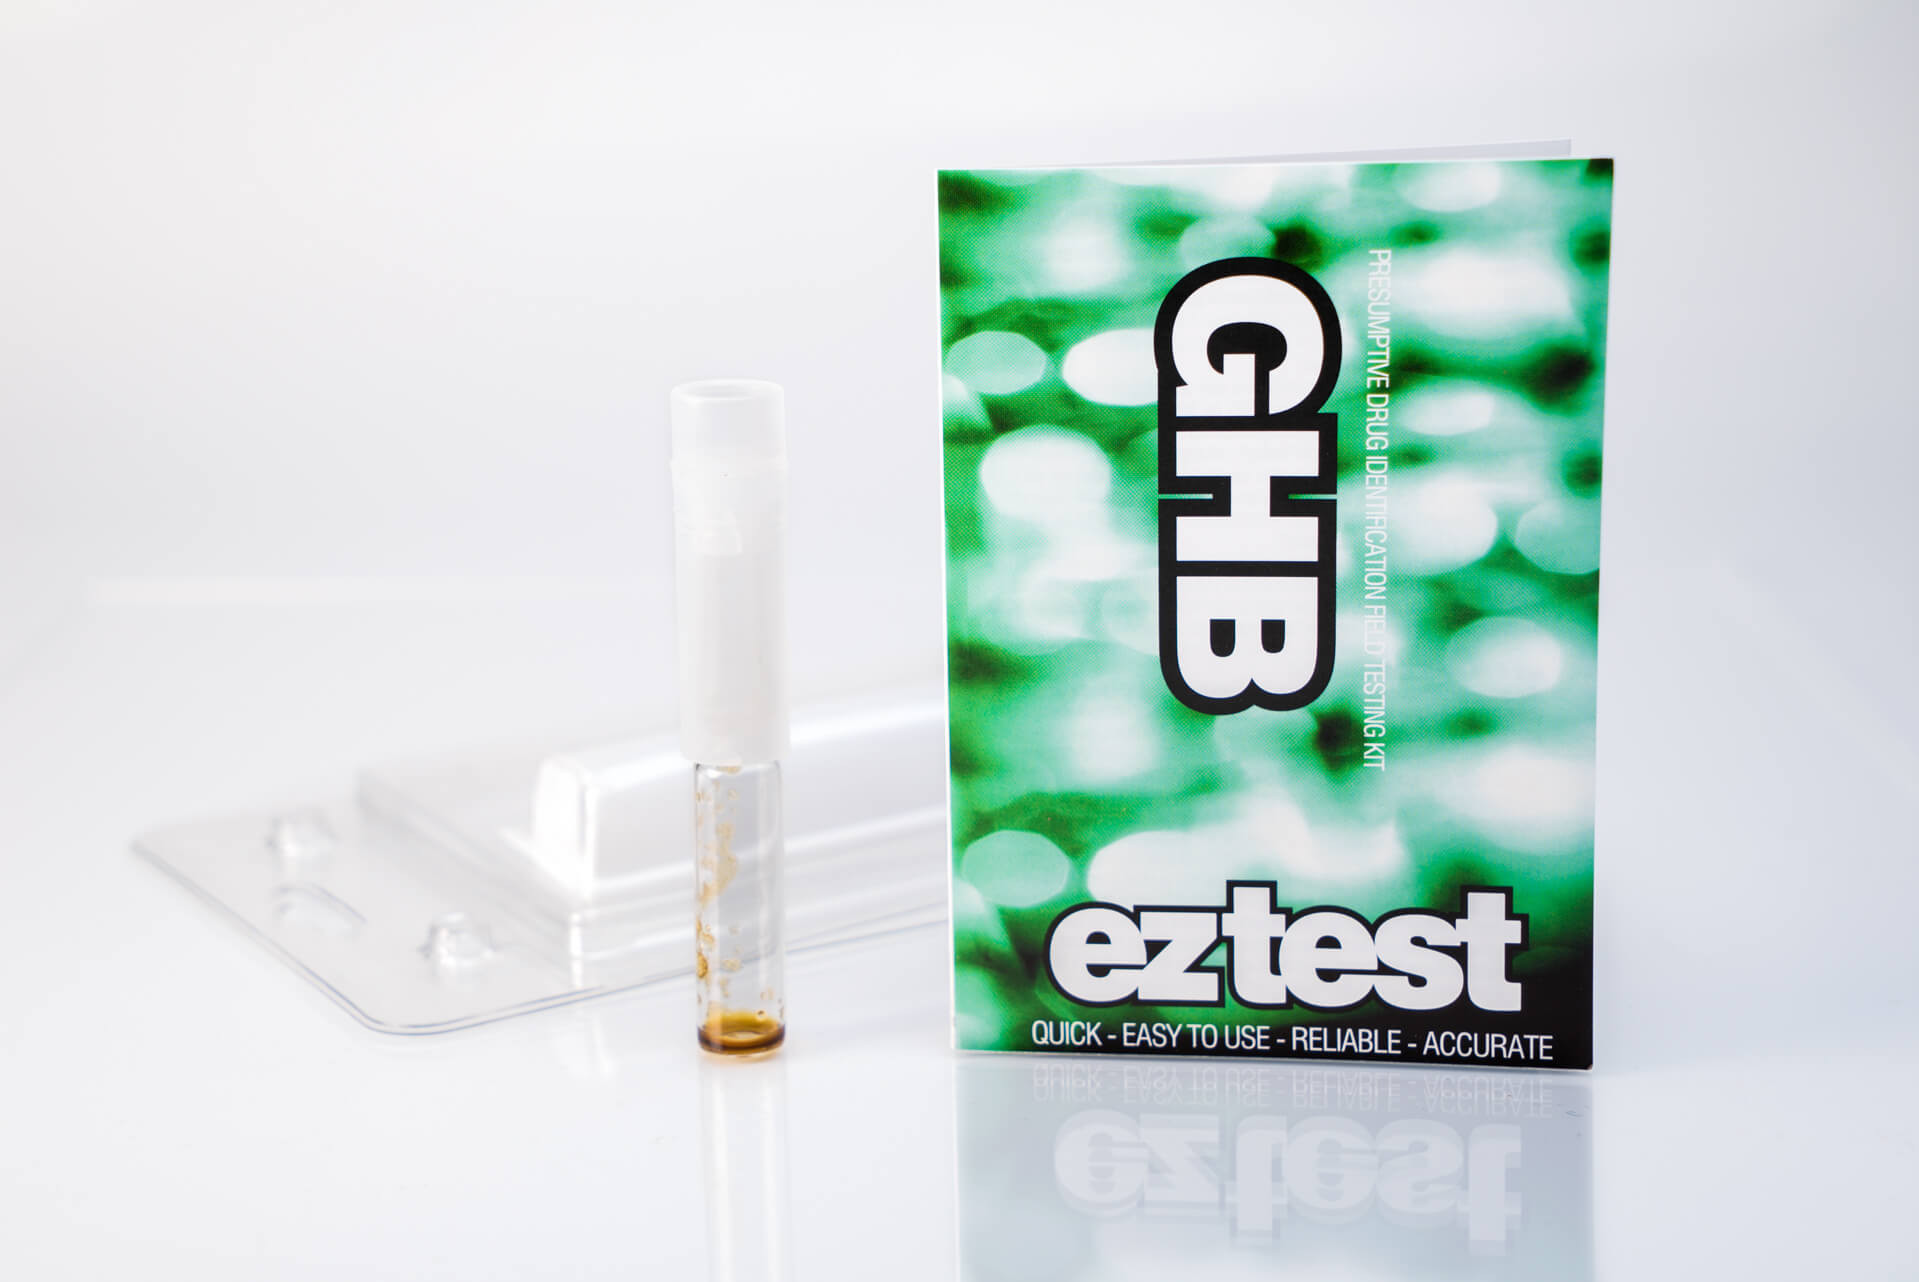 GHB Single Use Drug Testing Kit